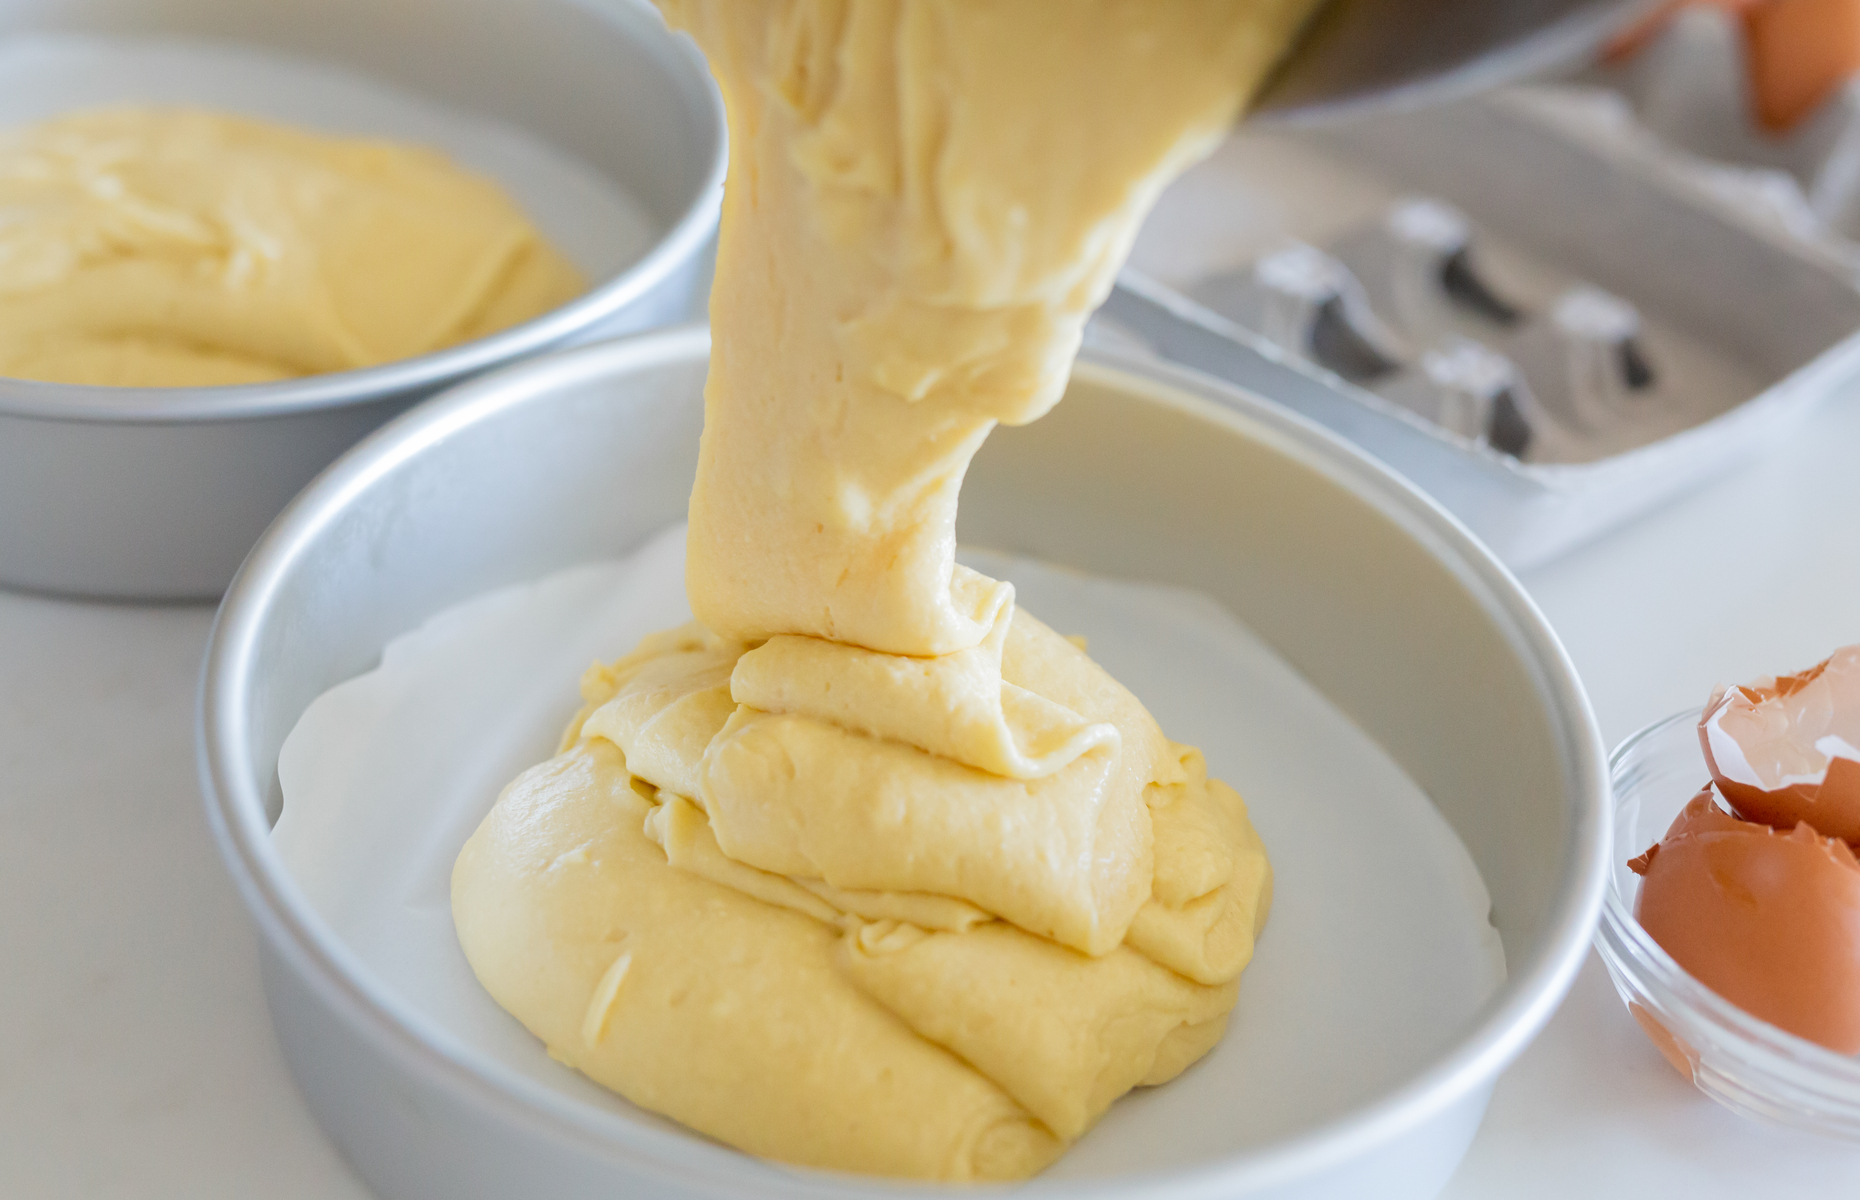 Pouring cake batter into a tin (Image: Karen Culp/Shutterstock)